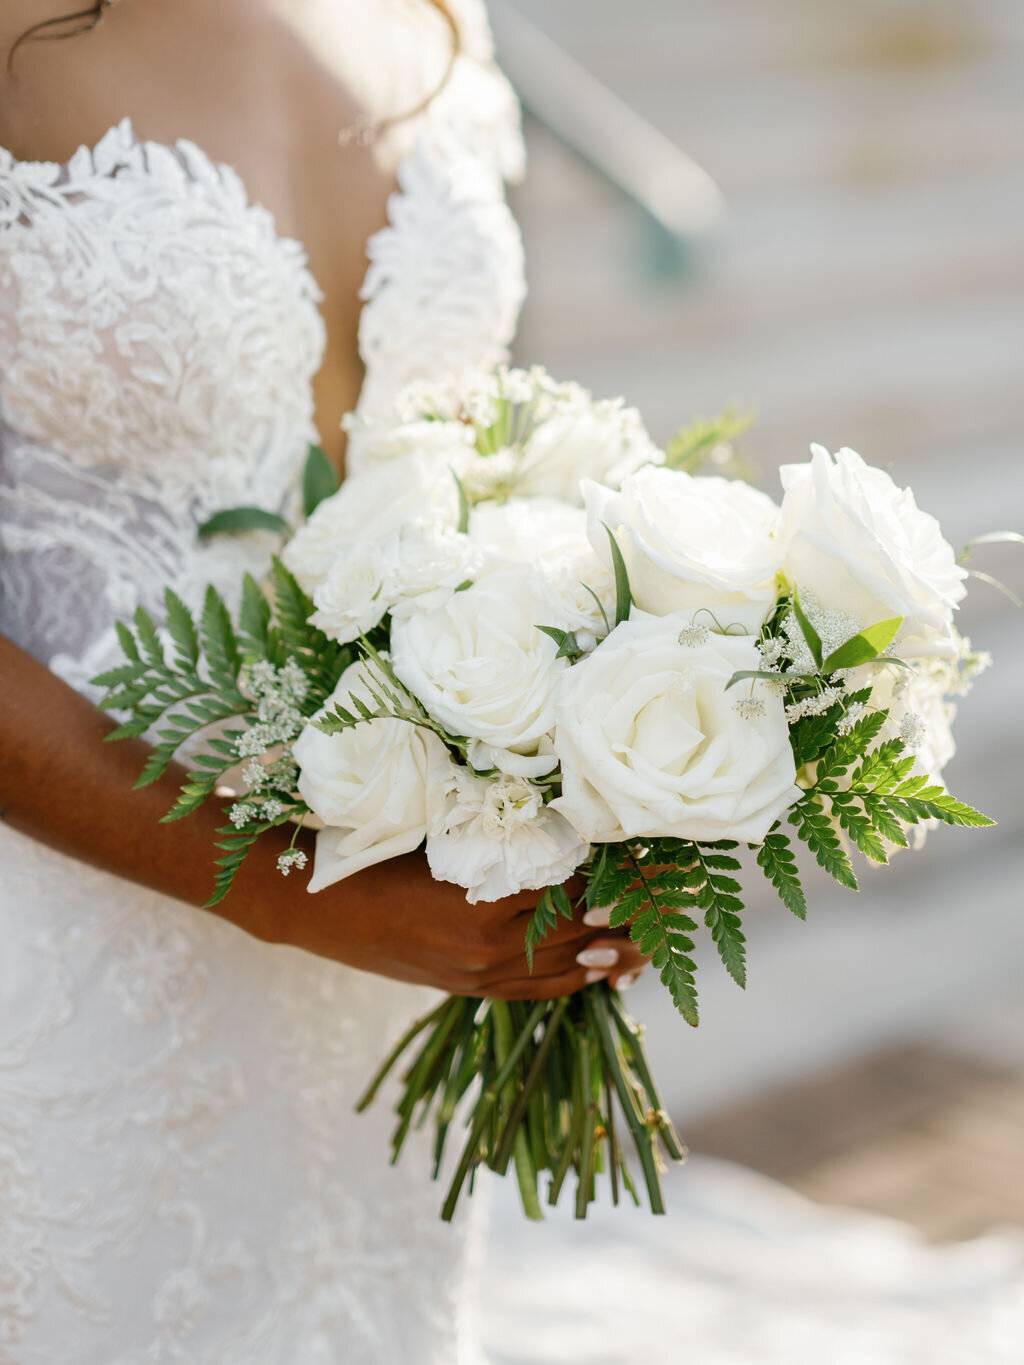 Jayne Heir Weddings and Events - Washington DC Metropolitan Area Wedding and Event Planner - Modern, Stylish, Custom, Top, Best Photo - 33